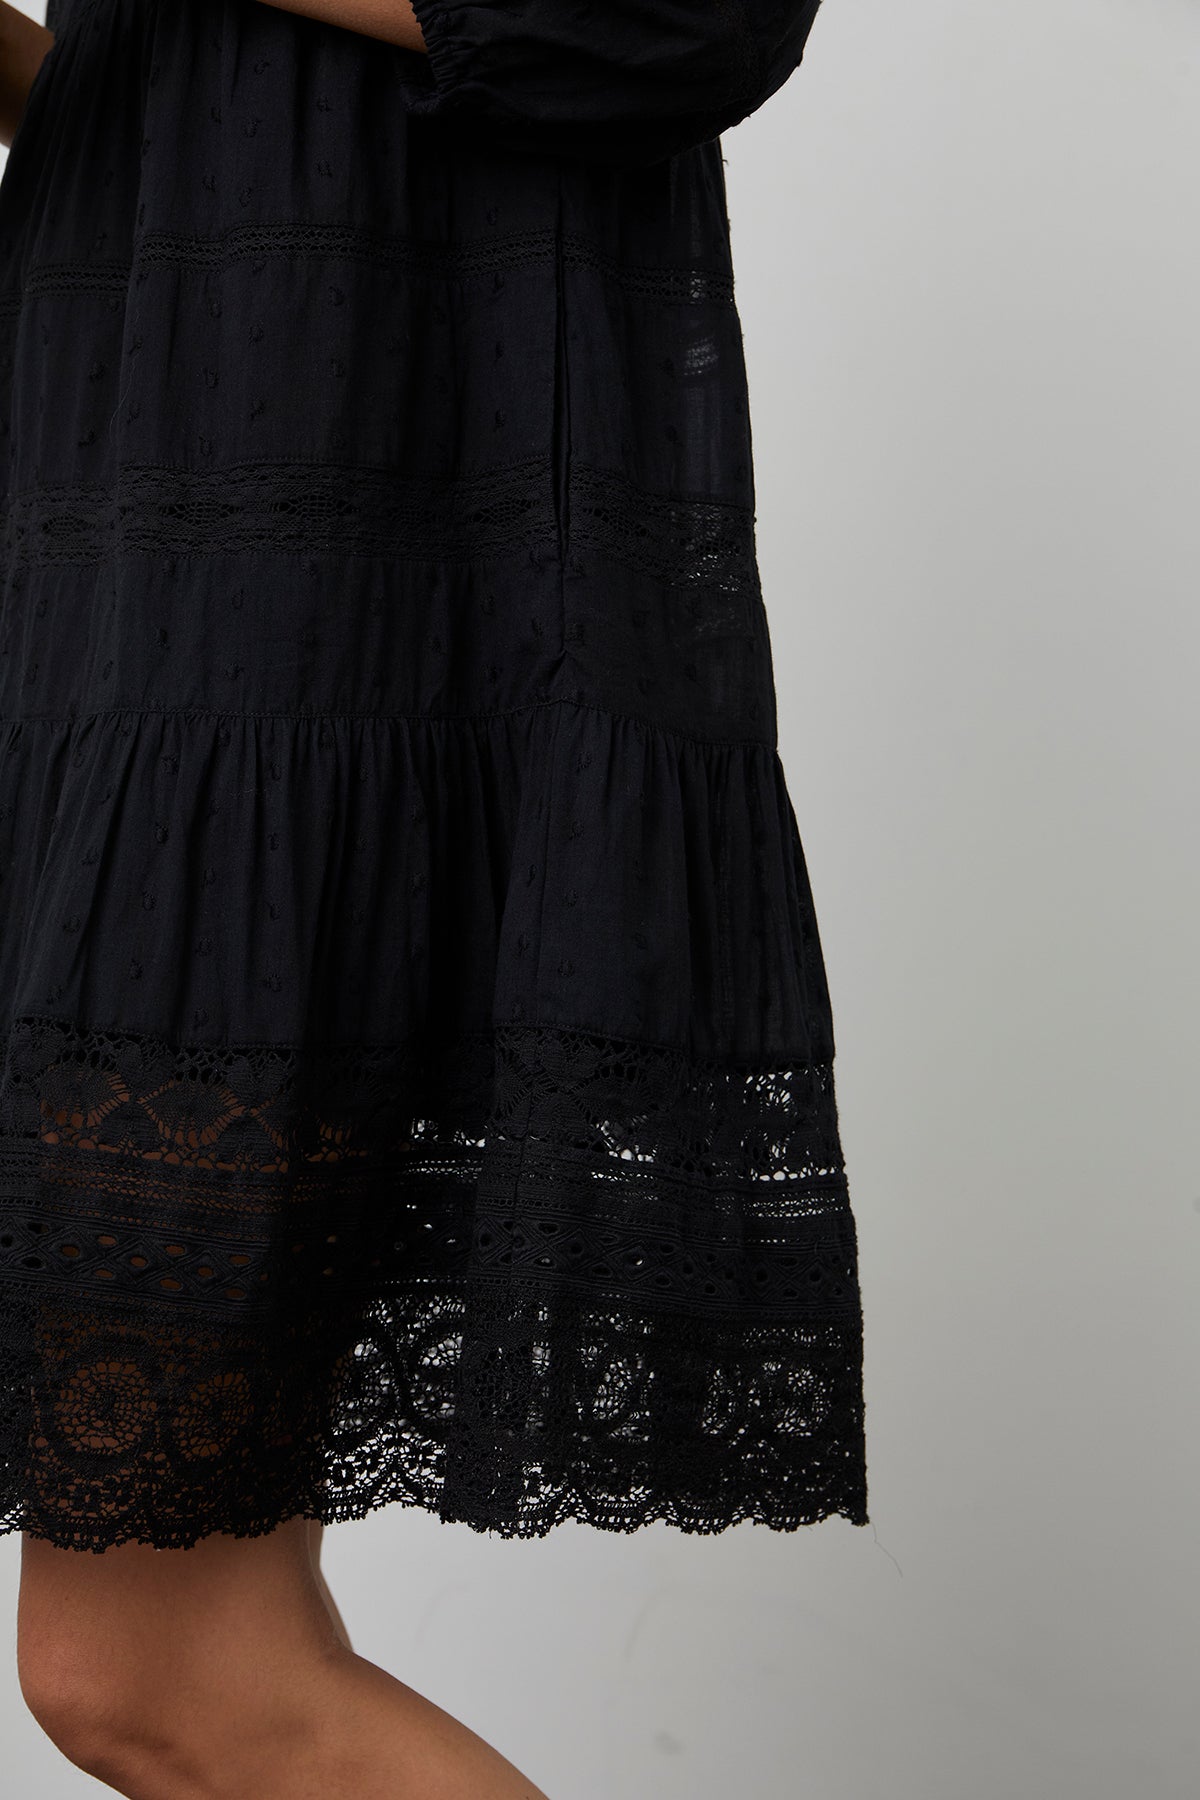 Dorothy Dress Black Lace Detail-21524946649281